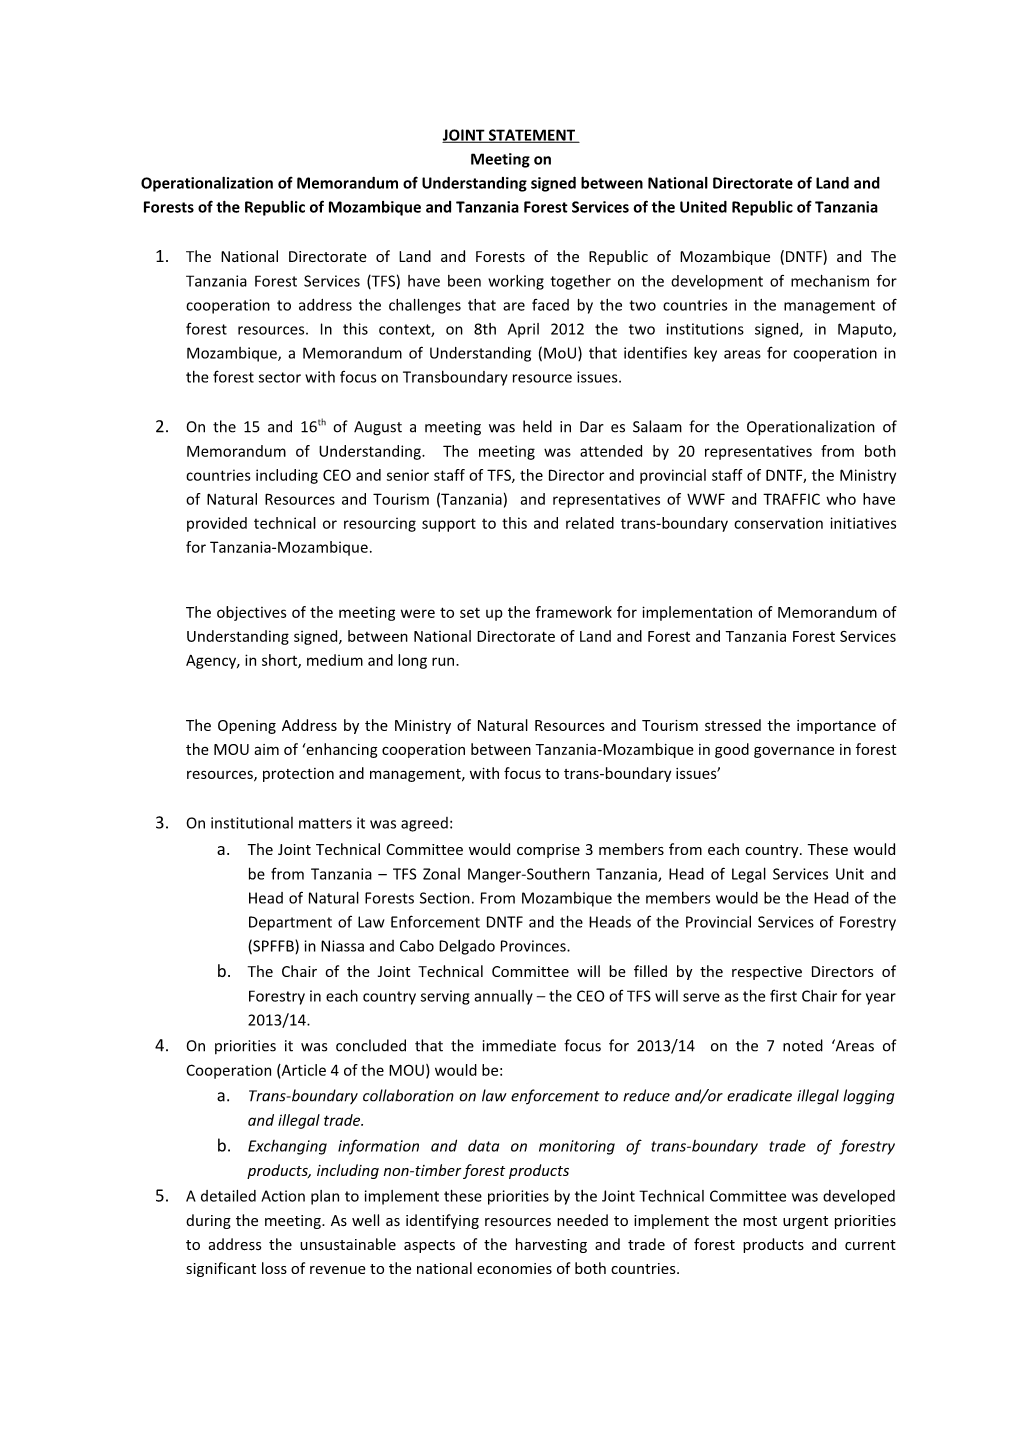 Operationalization of Memorandum of Understanding Signed Between National Directorate